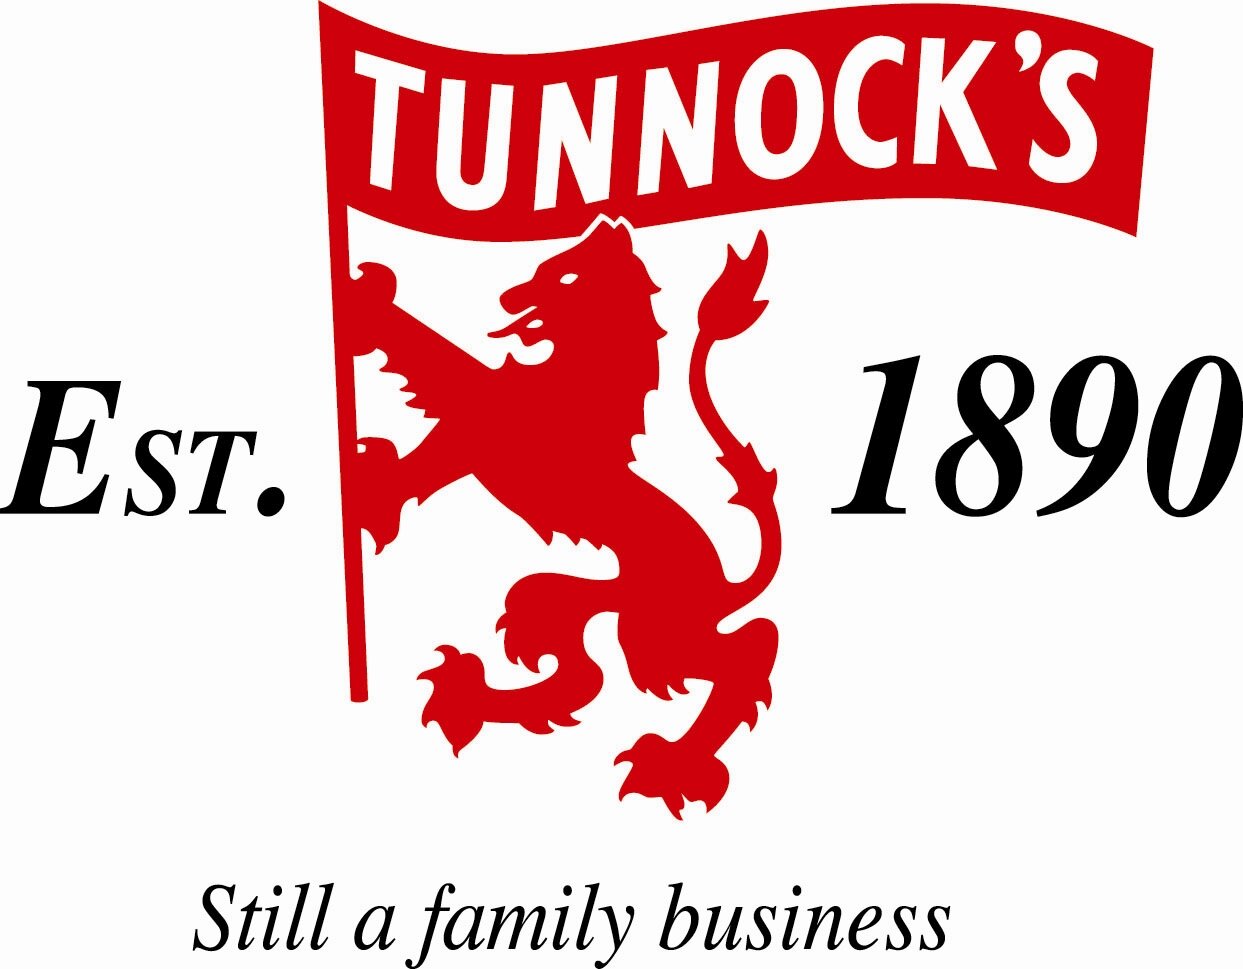 tunnocks logo Higher Res.jpeg